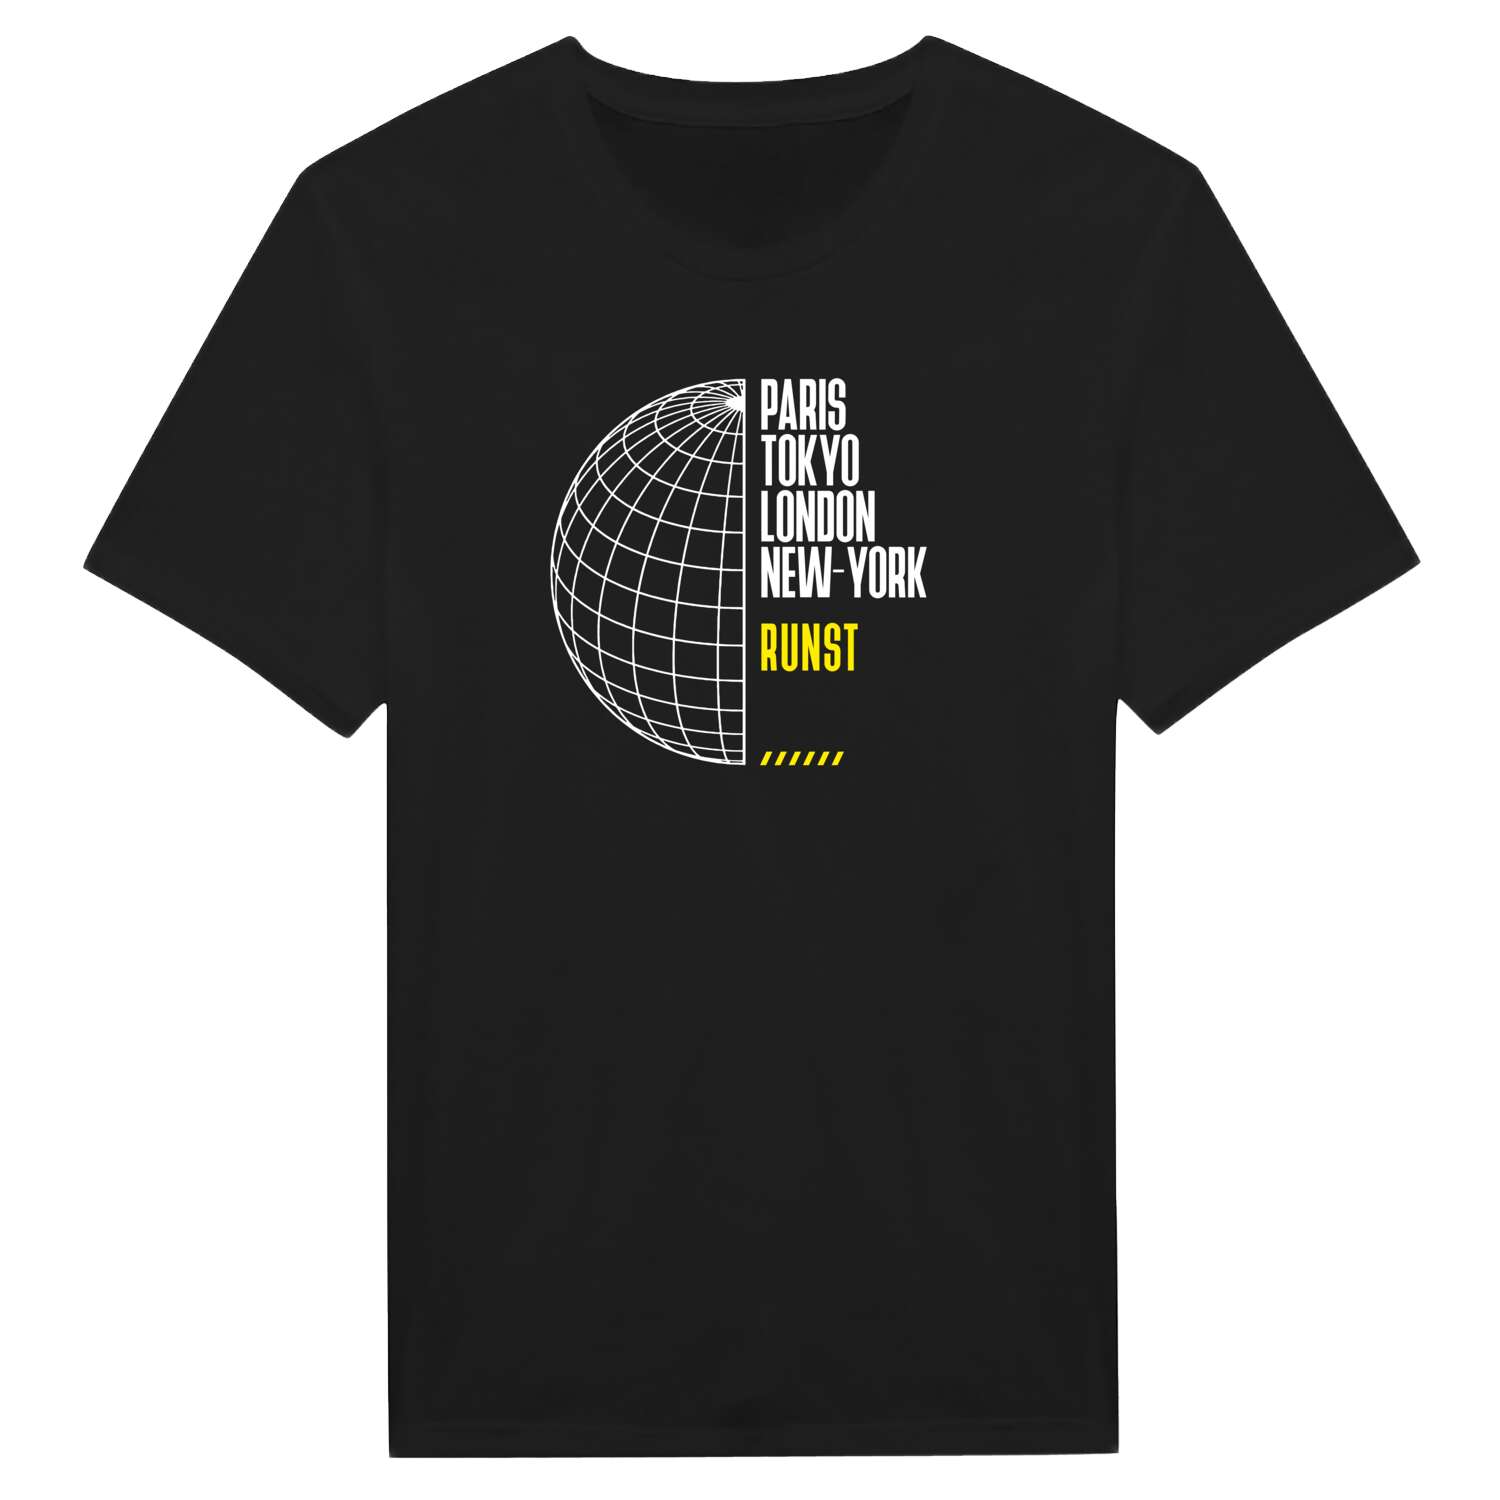 Runst T-Shirt »Paris Tokyo London«